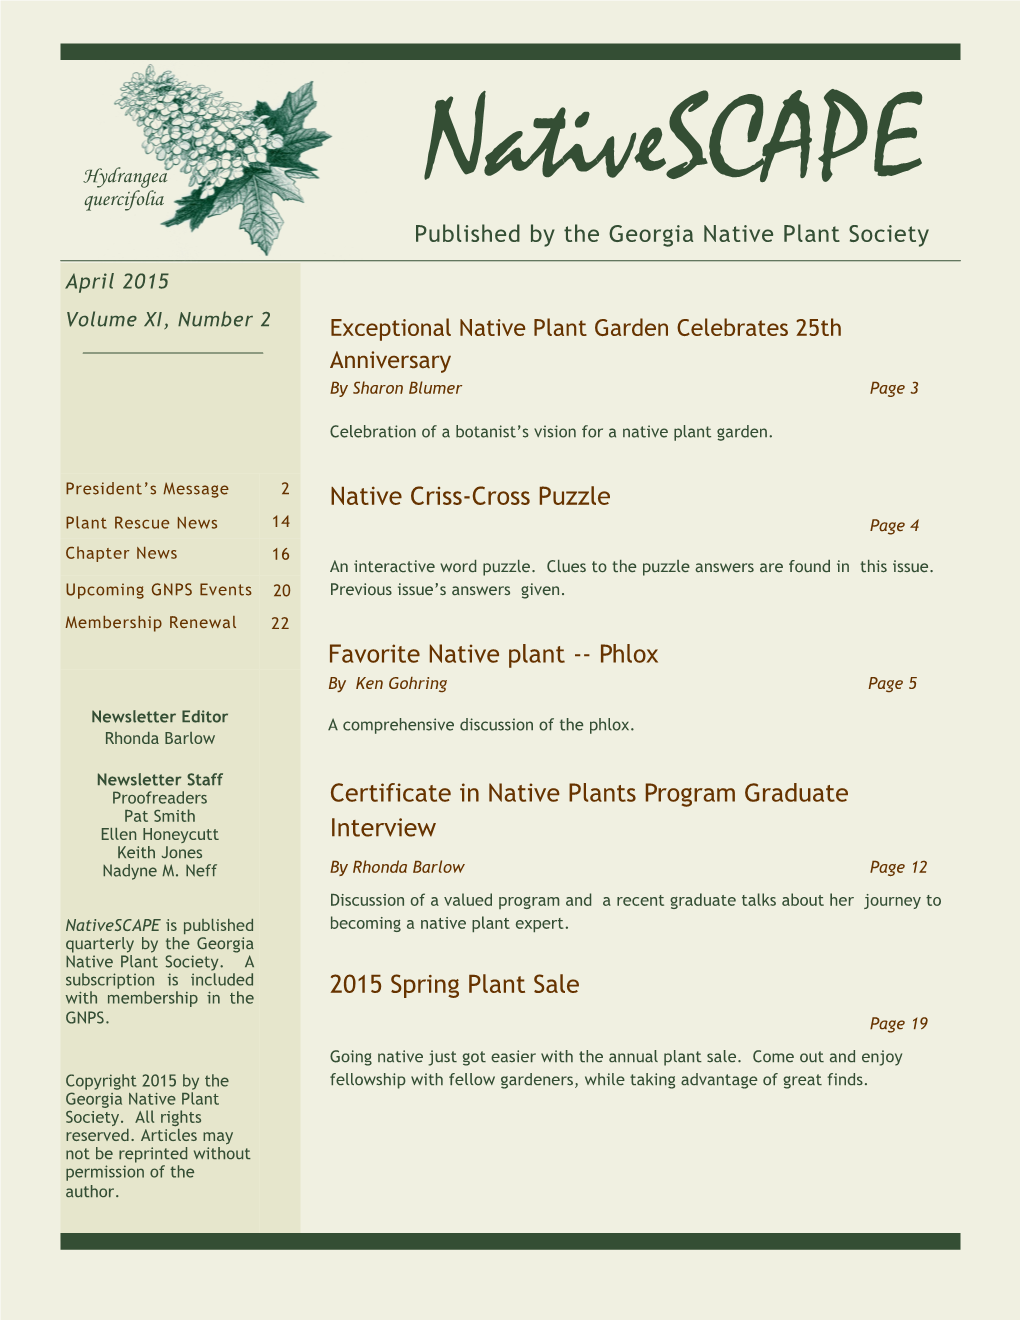 Phlox Certificate in Native Plants Program Graduate